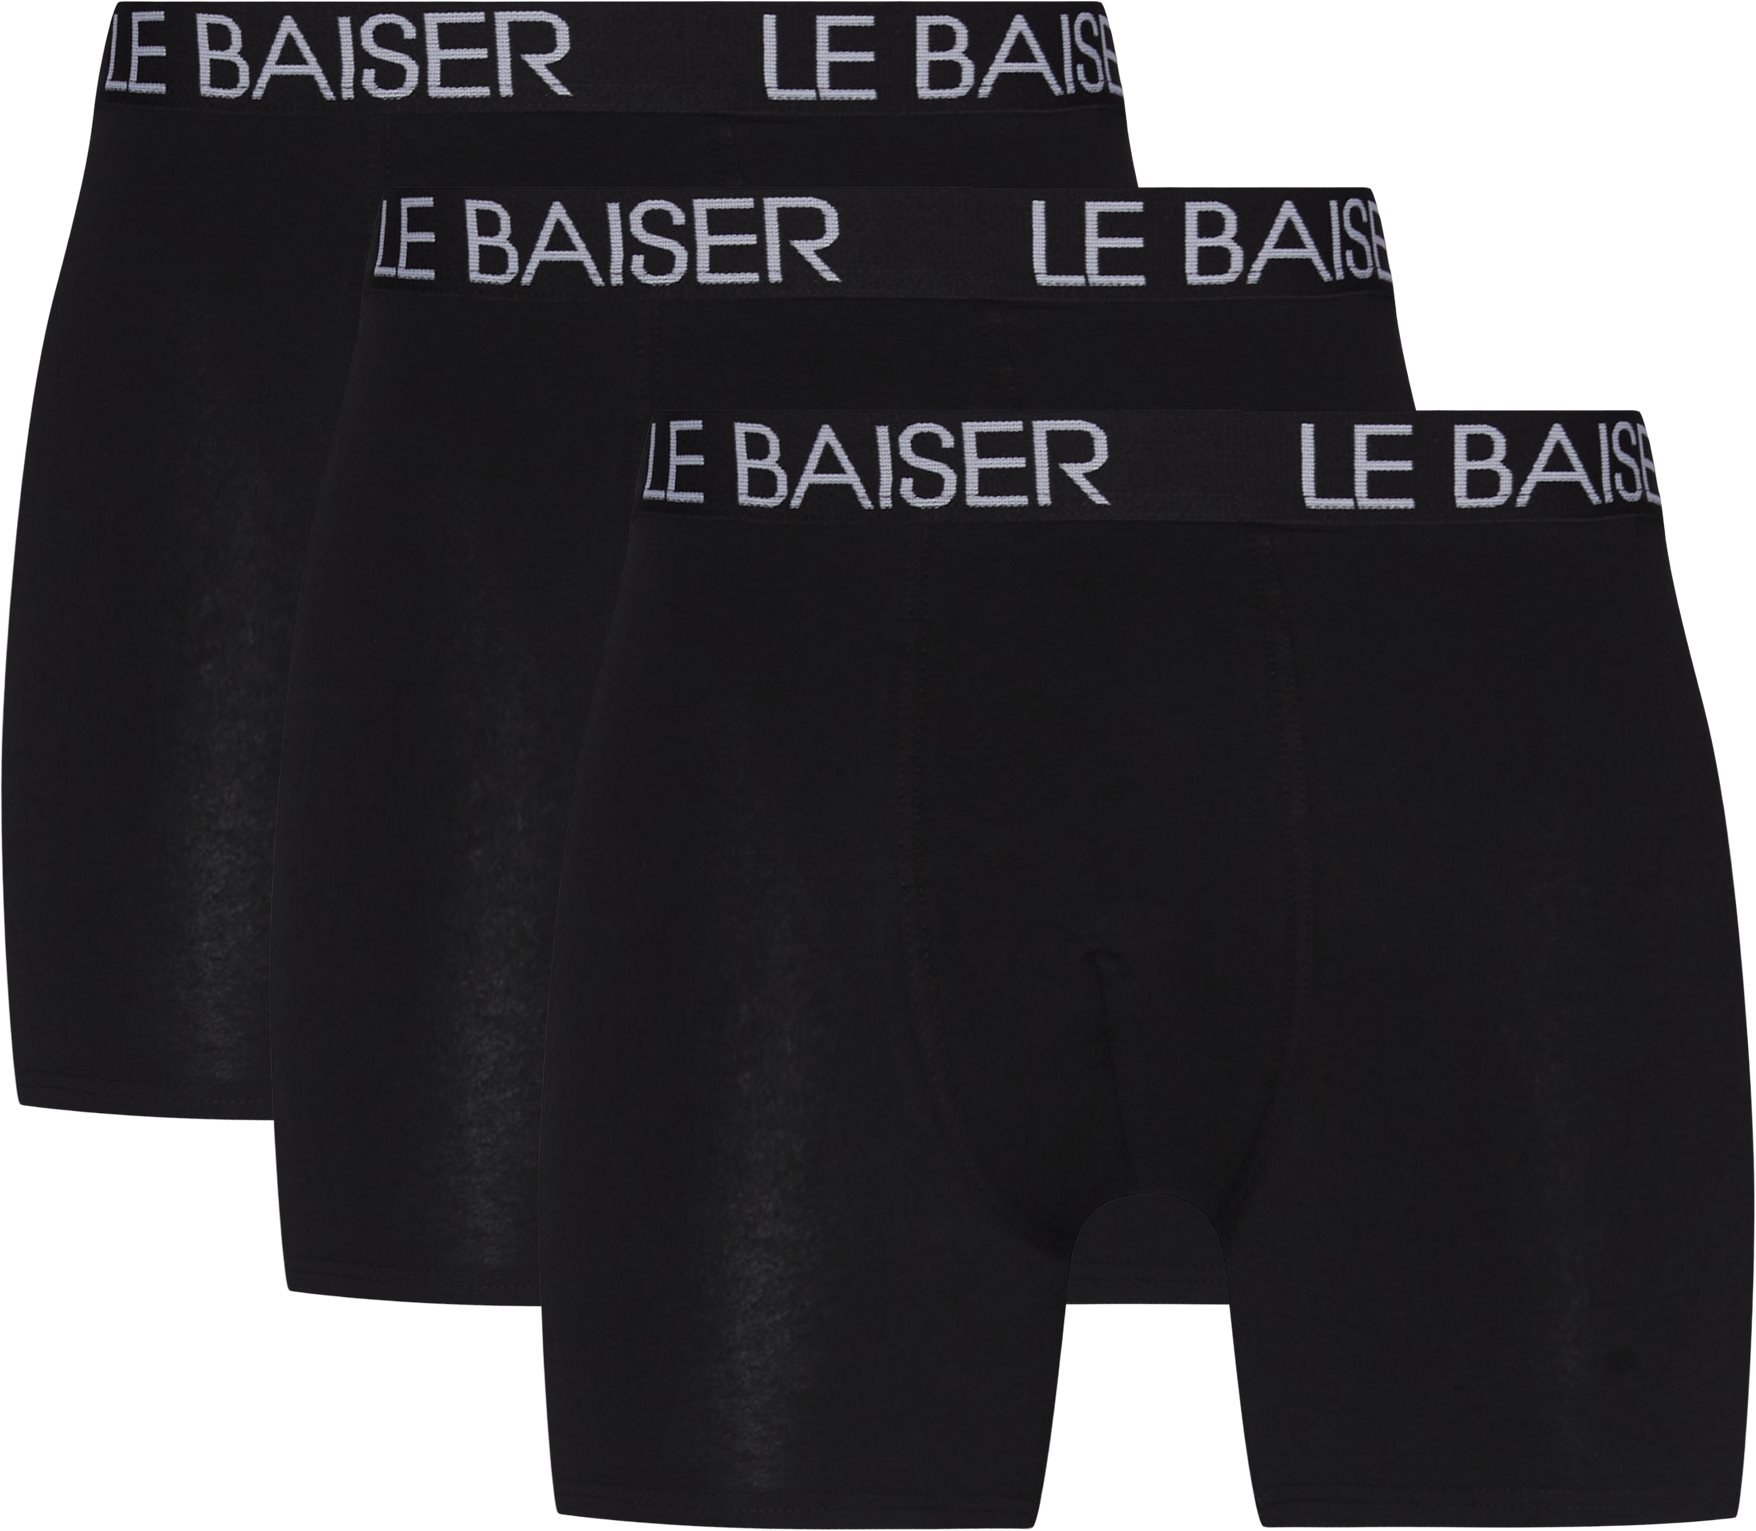 Le Baiser Underwear TIGHTS 3 PACK 88020-1100 Black